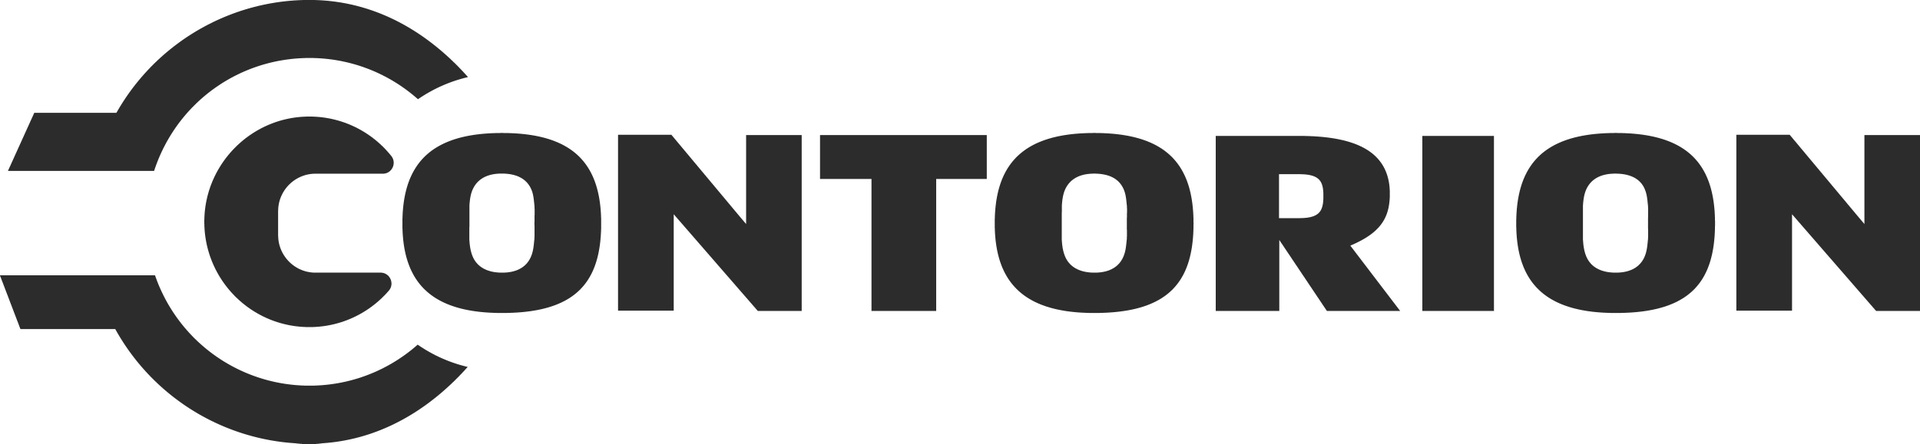 Contorion GmbH